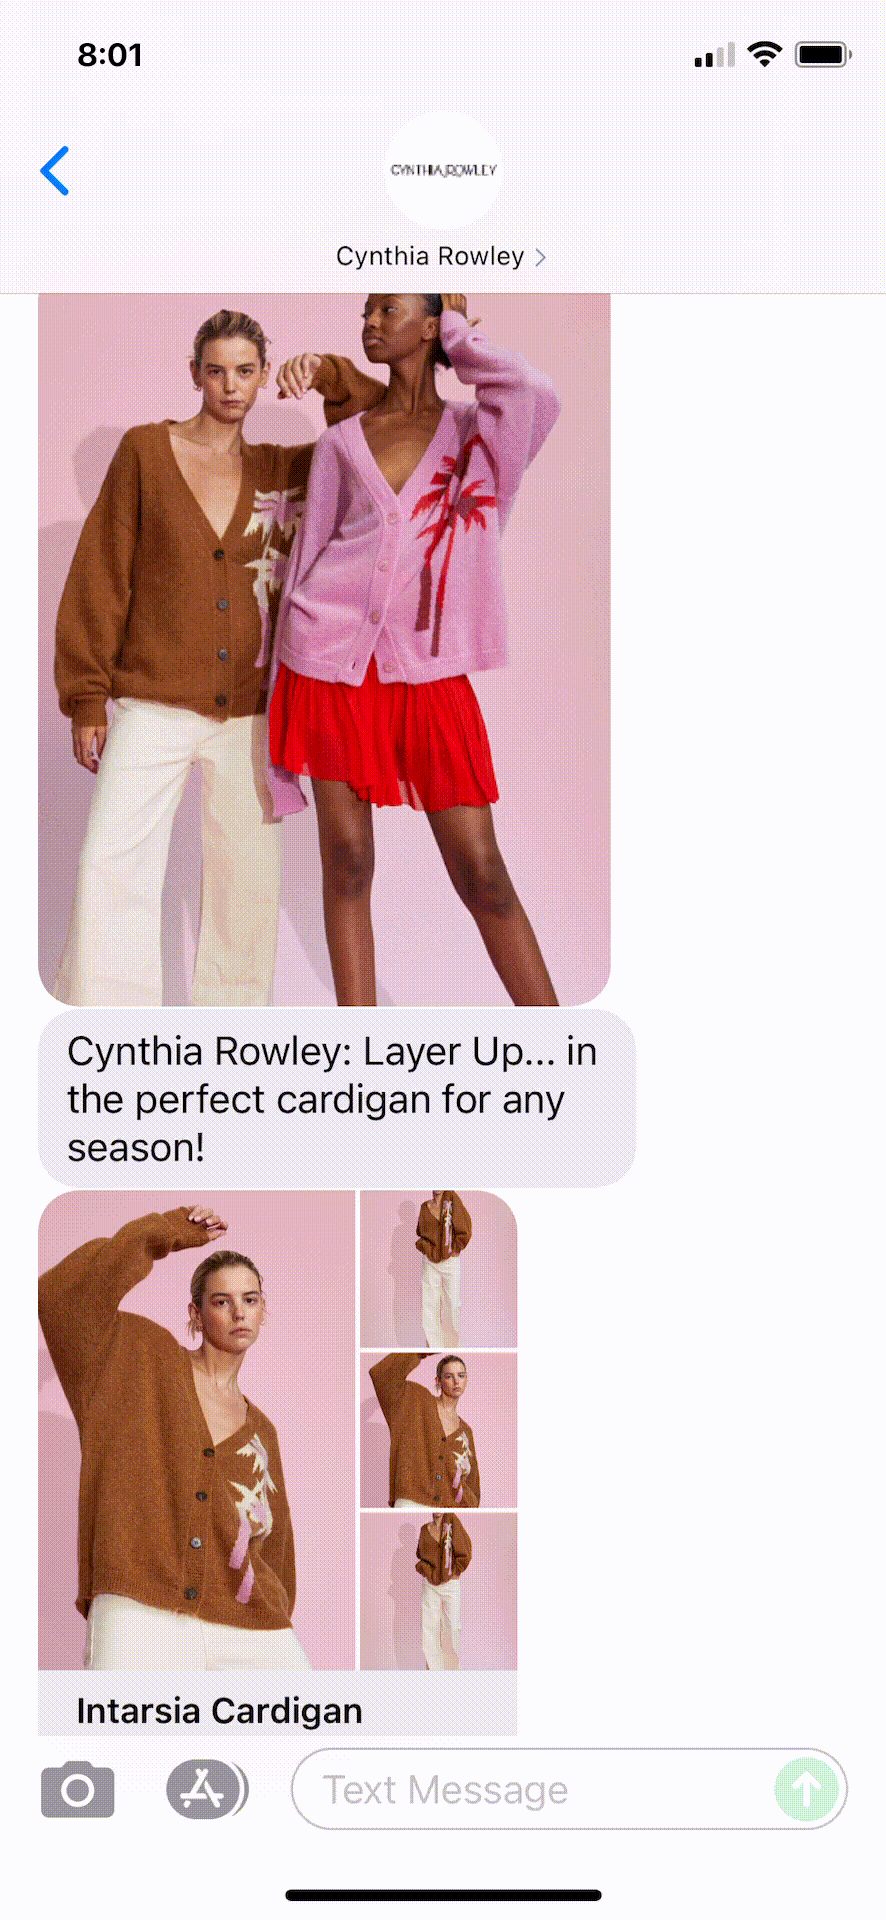 Cynthia-Rowley-Text-Message-Marketing-Example-09.09.2021